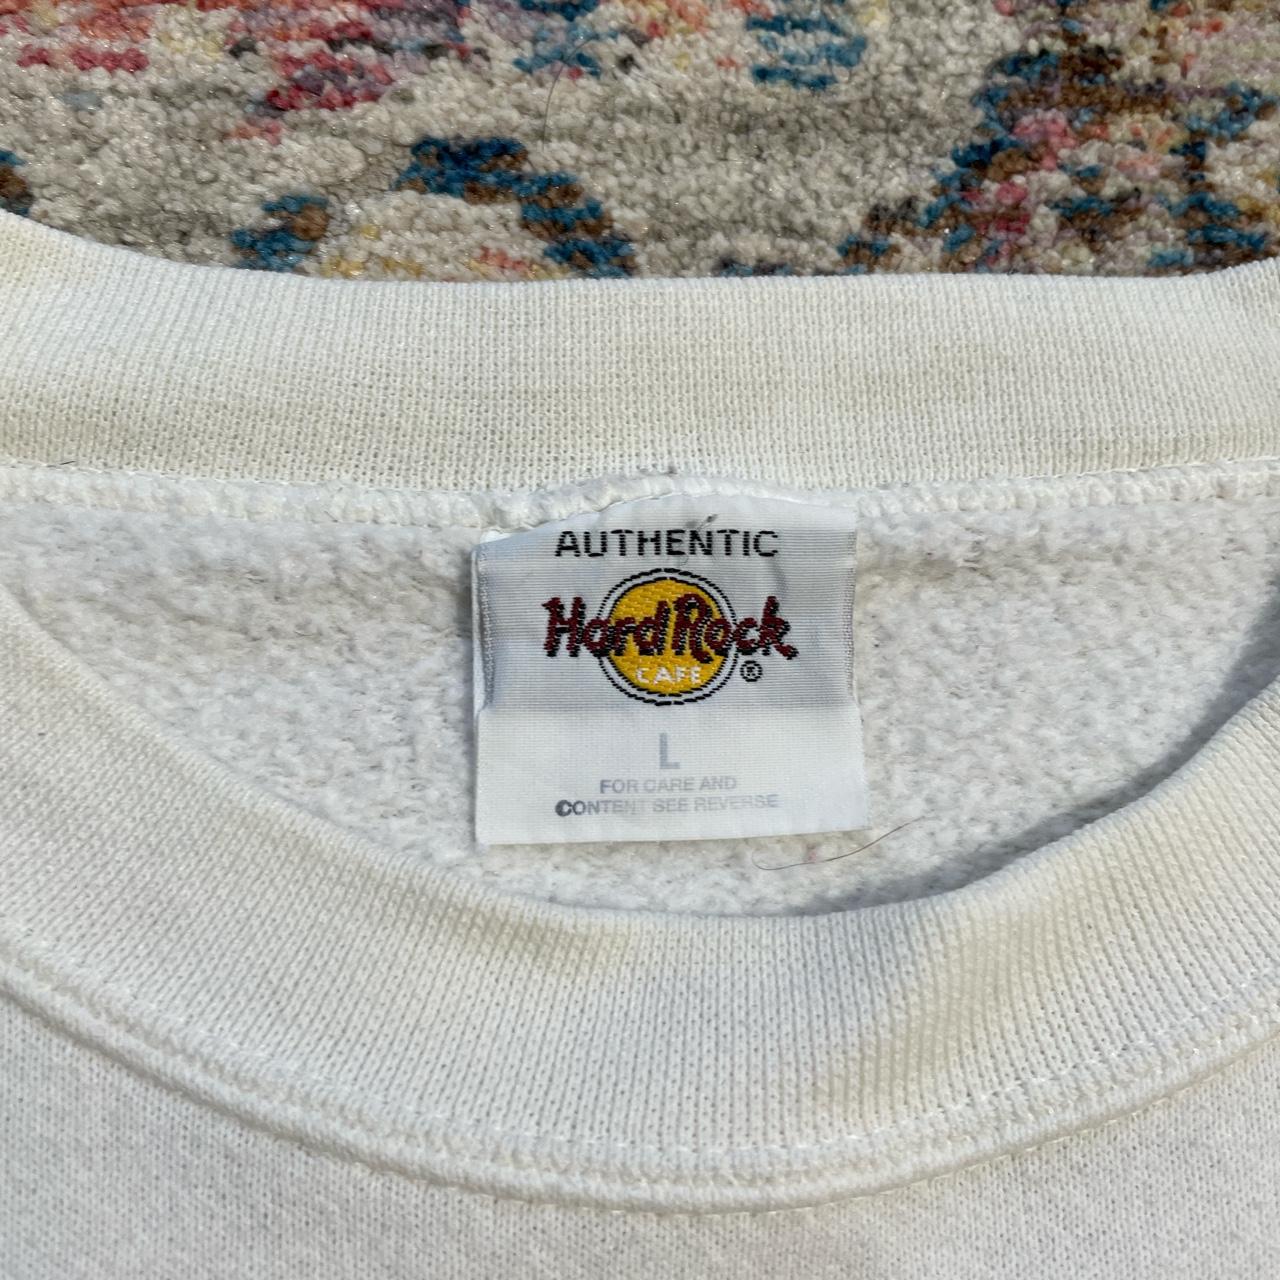 Vintage Hard Rock Cafe White Sweatshirt